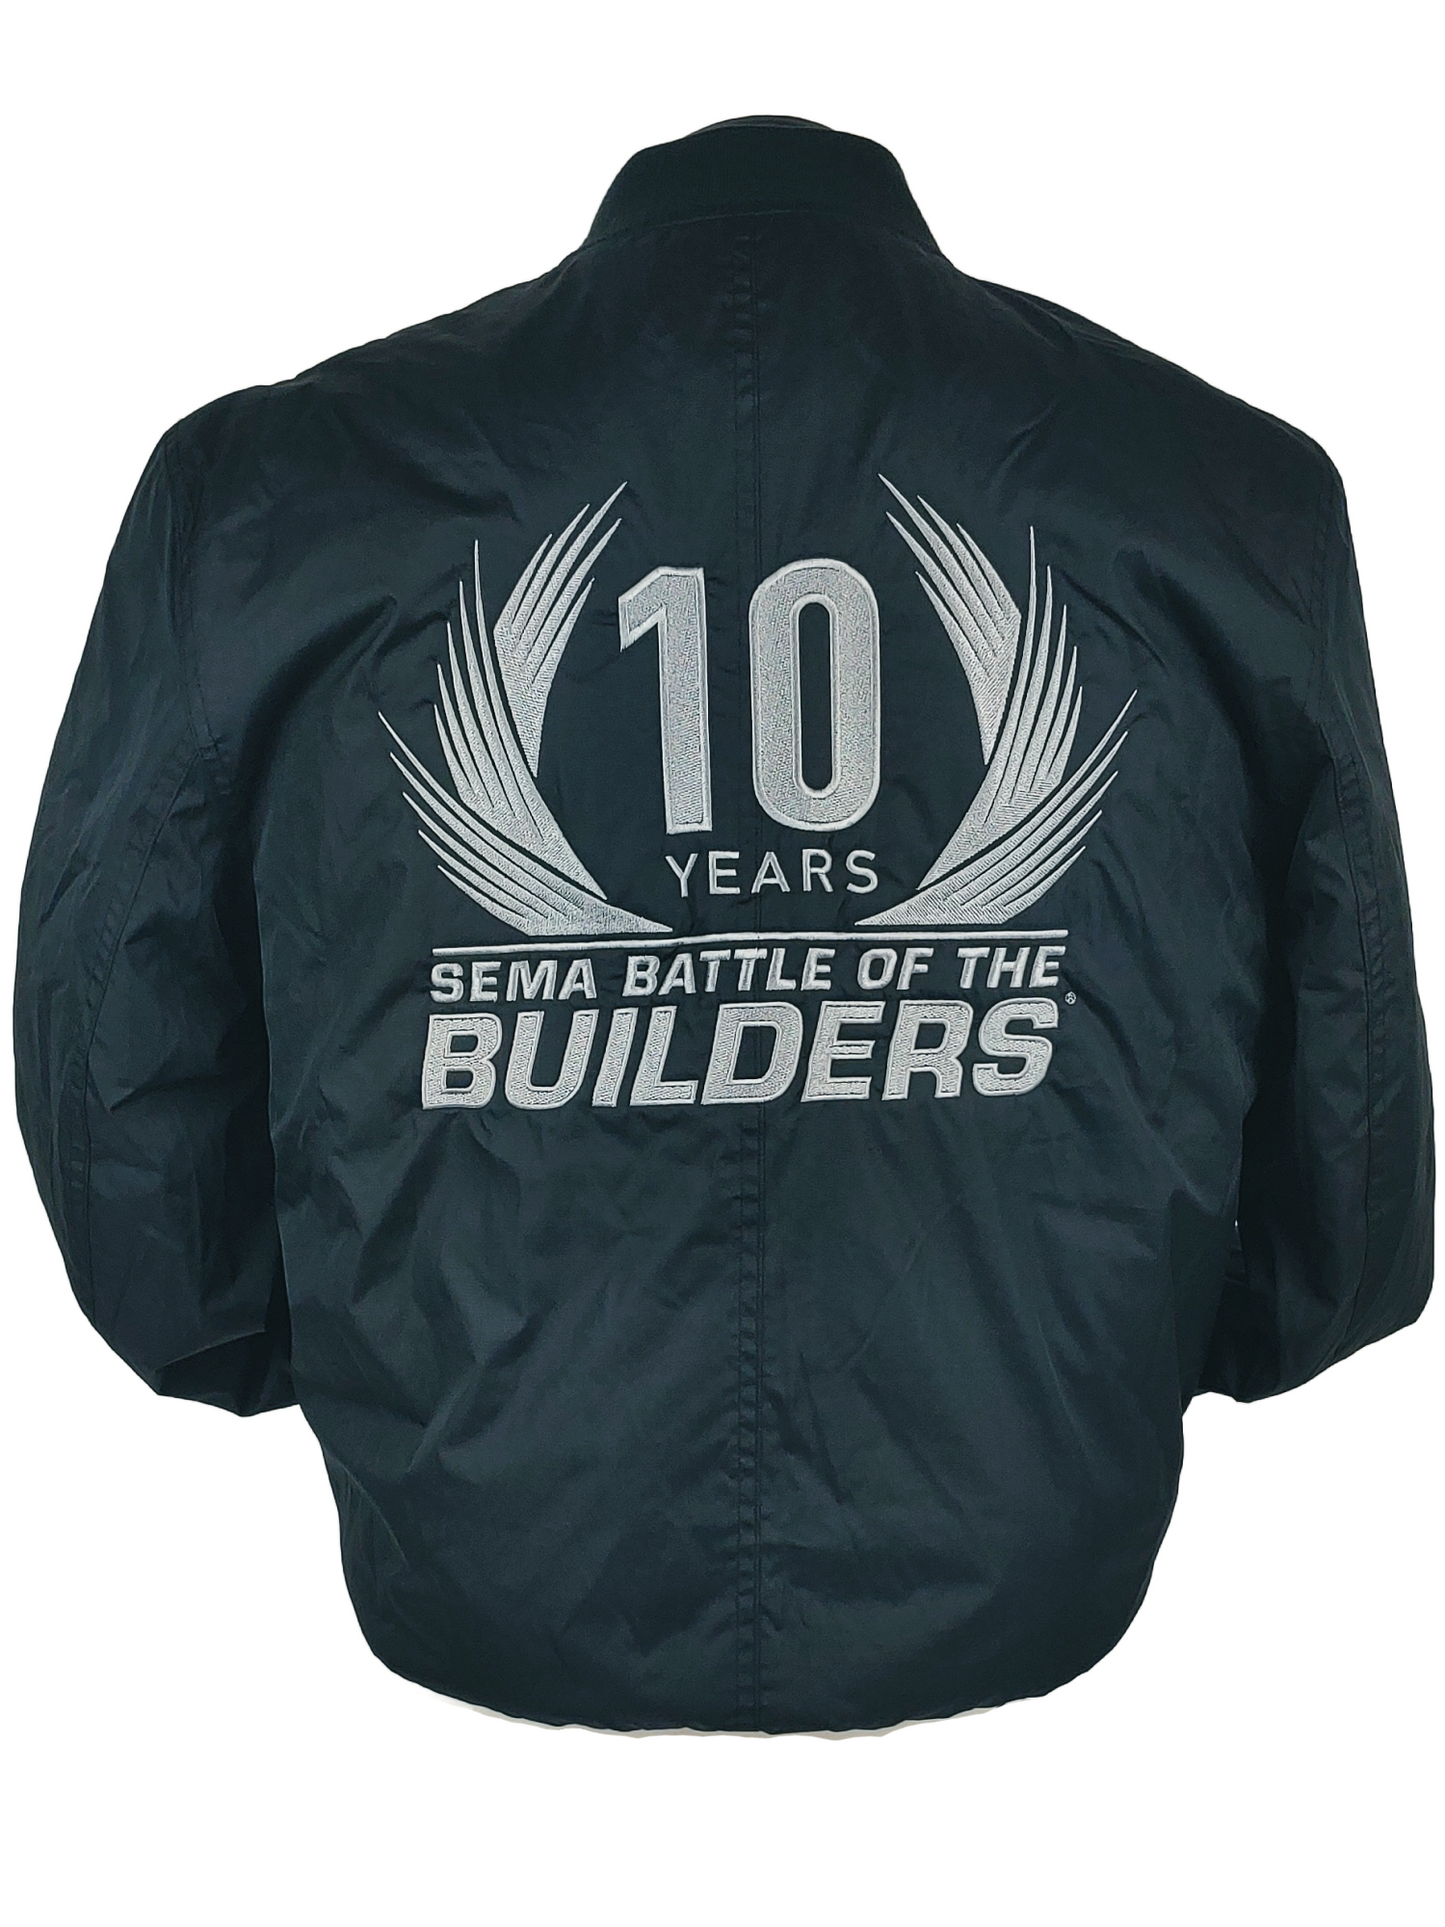 Battle of the Builders - 10 year Anniversary - Black - Lightweight Wind Breaker